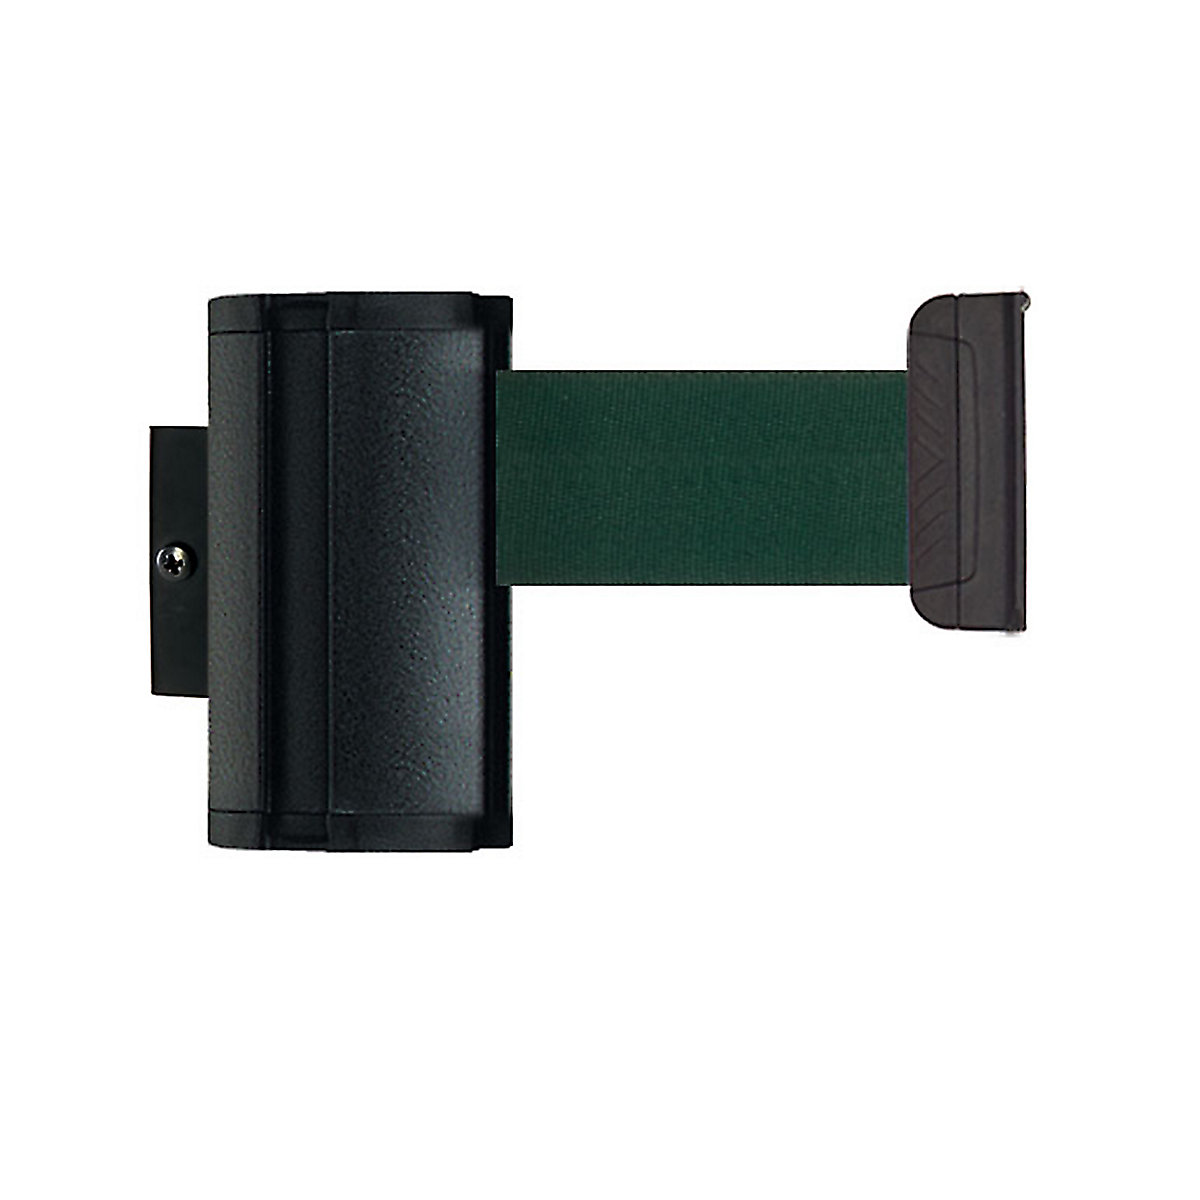 Bandcassette Wall Mount, uittreklengte max. 3700 mm, bandkleur groen